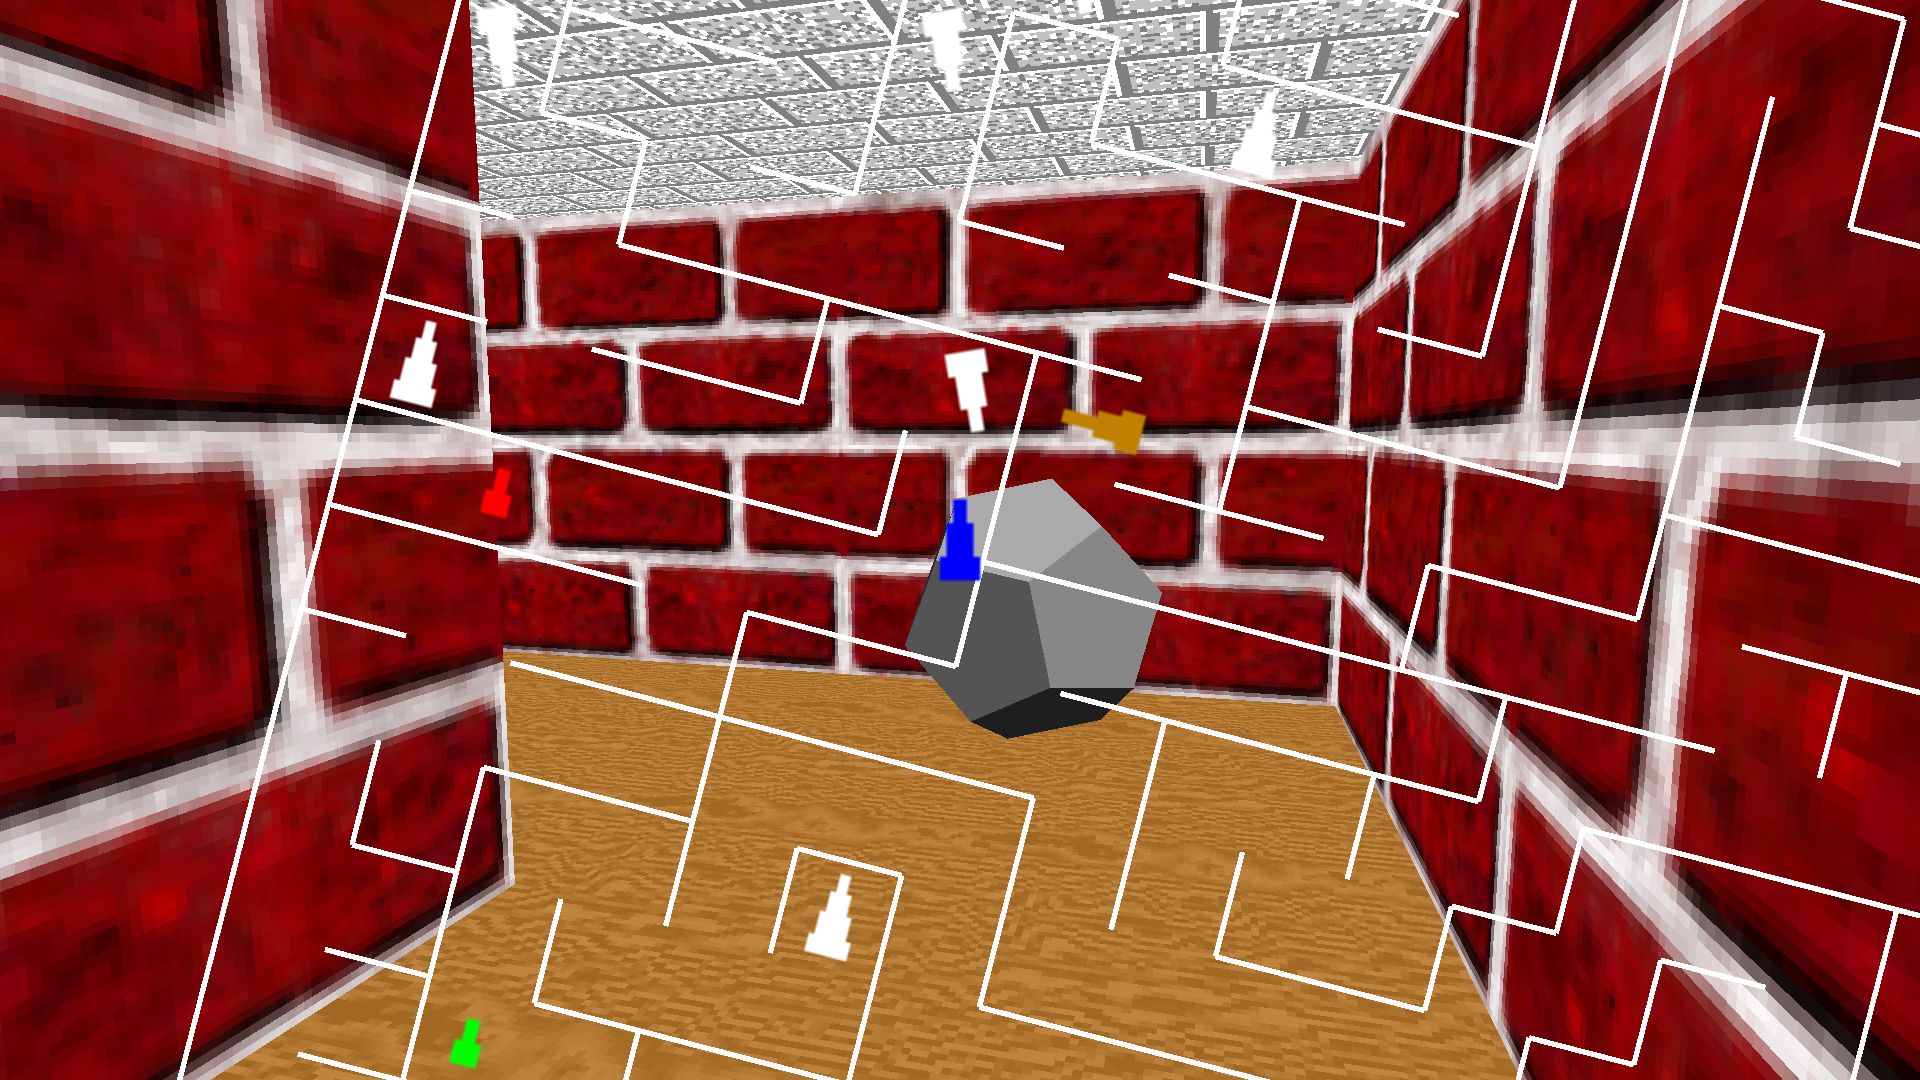 Windows 3D Maze Screensaver Game by kurtis2221